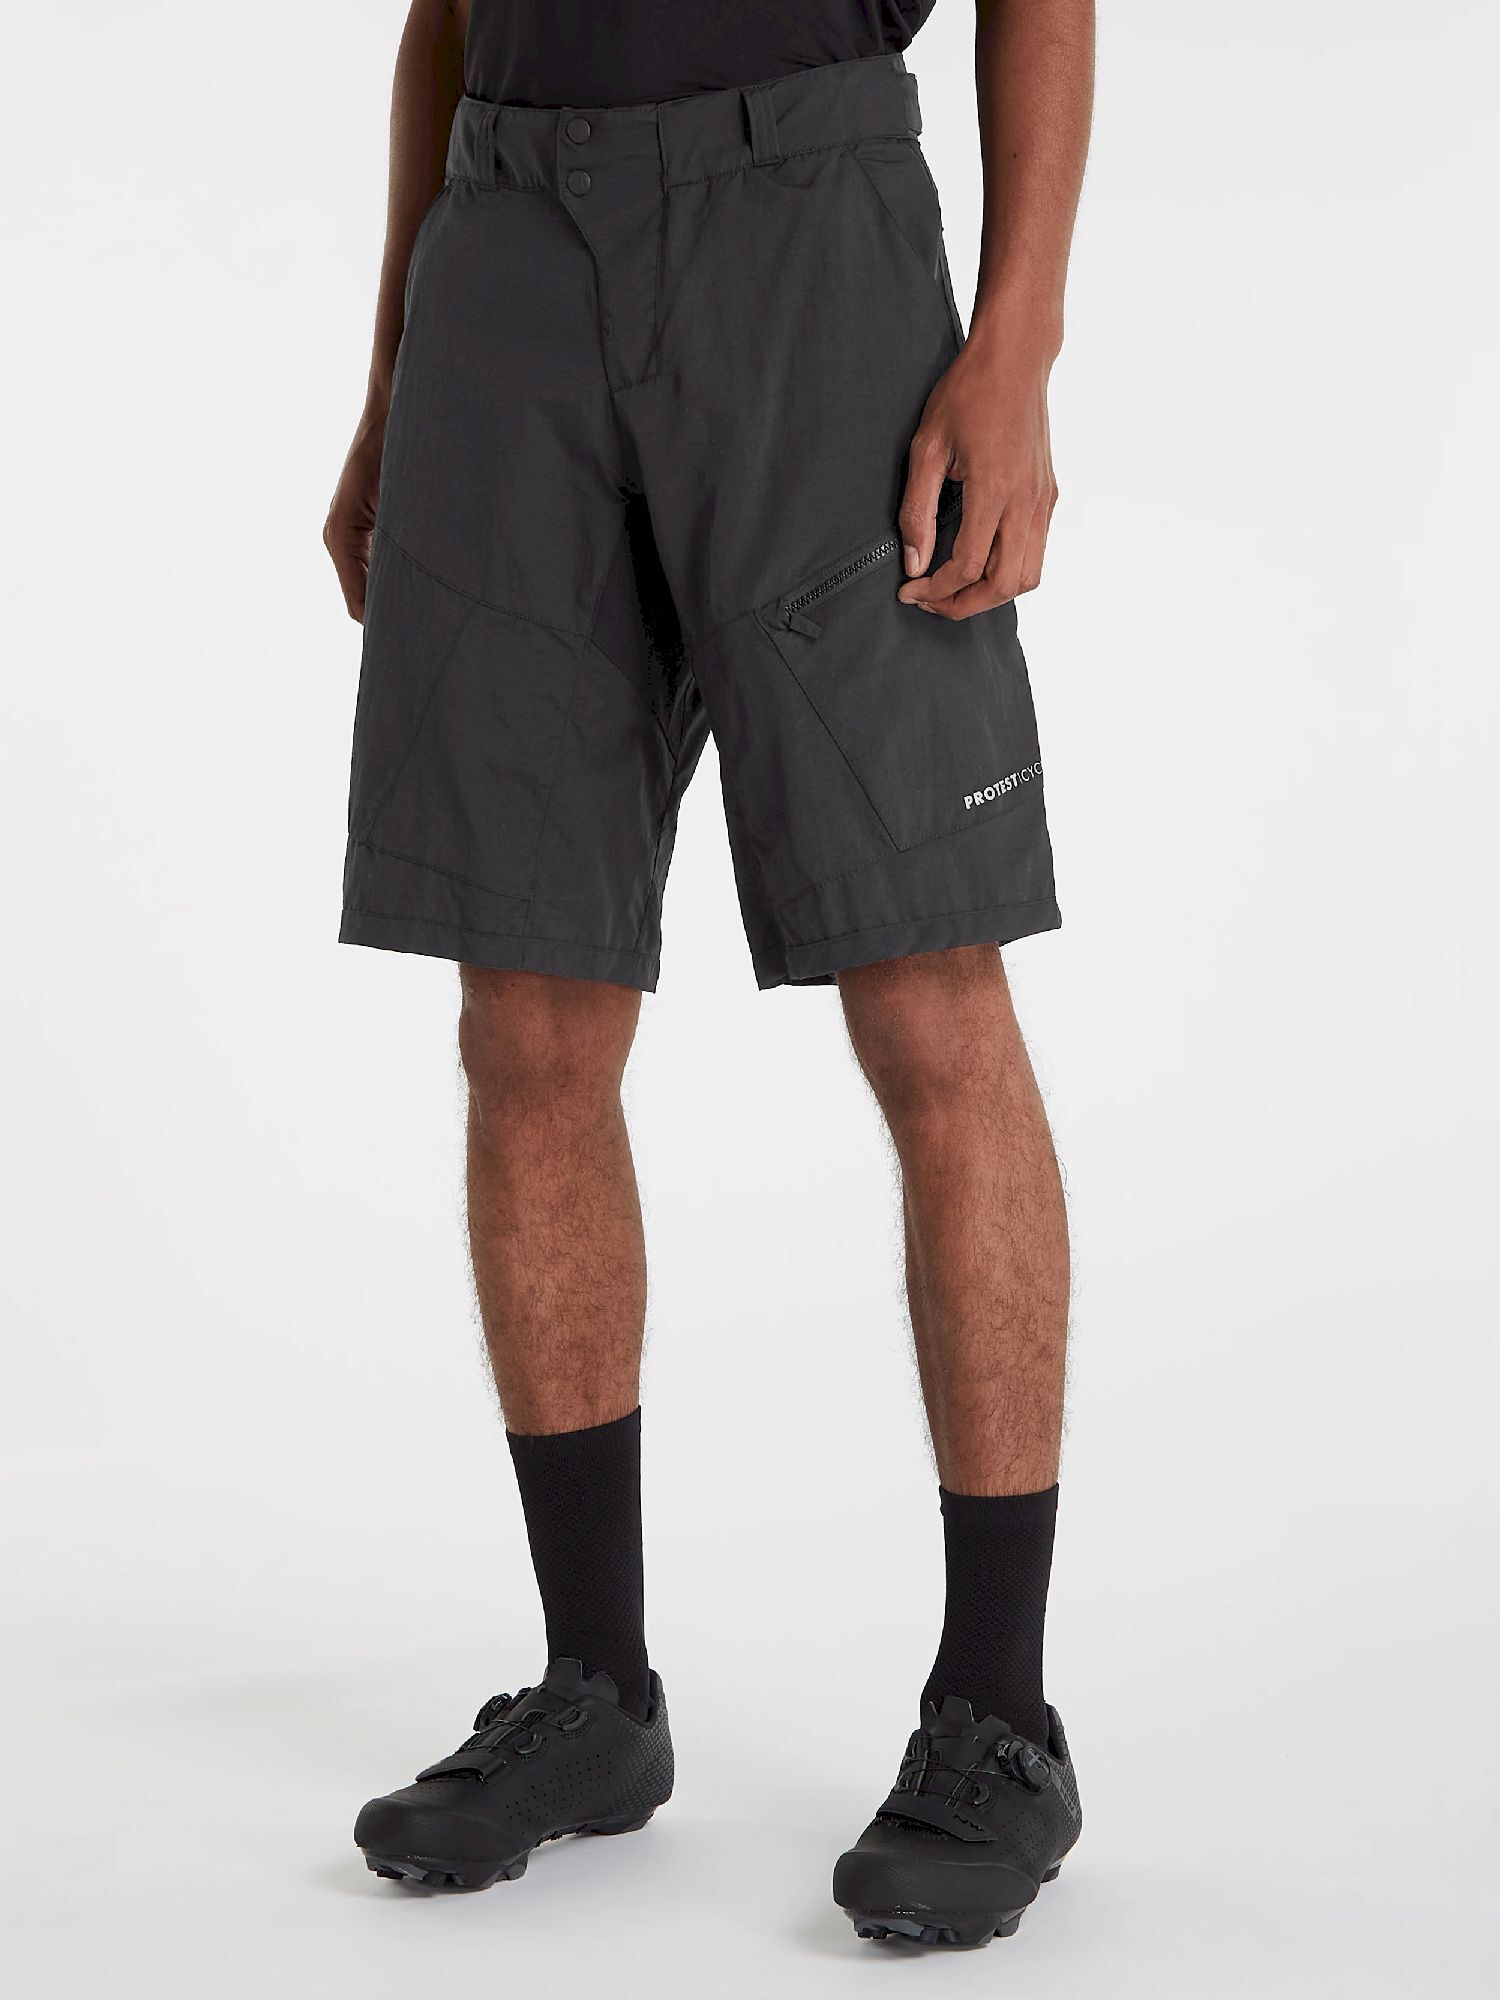 Protest Prtleezer - MTB shorts - Men's | Hardloop